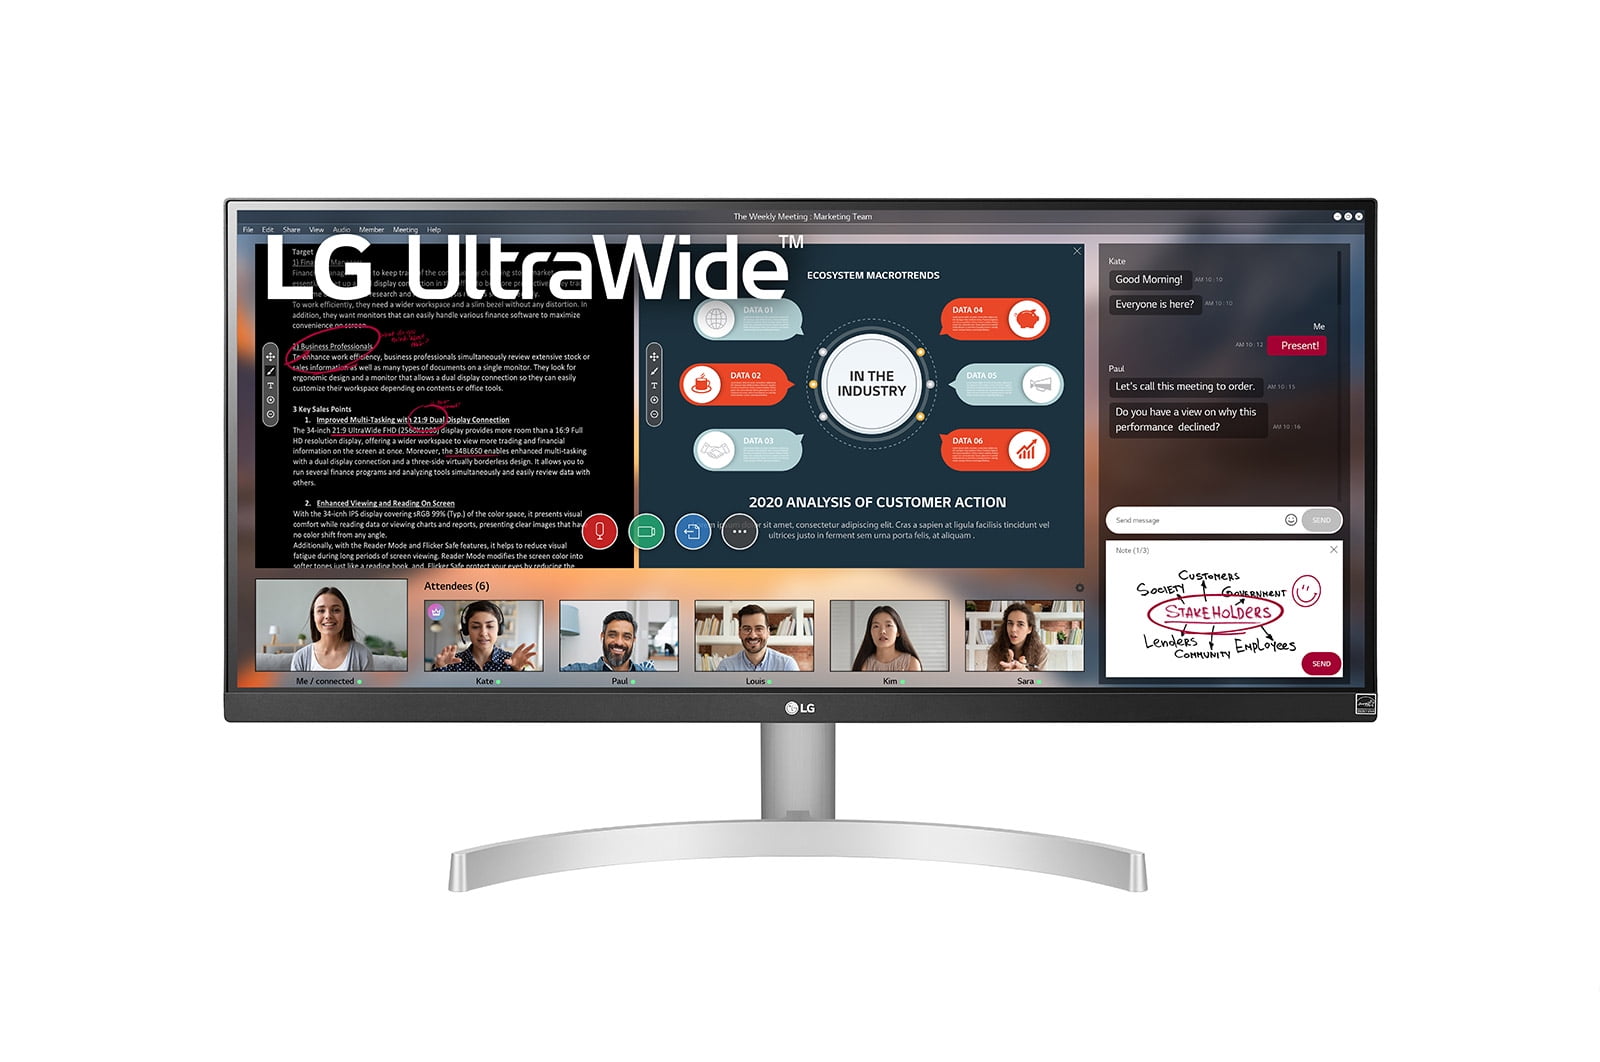 LG 29” UltraWide Full HD (2560 x 1080) IPS Display with FreeSync -  29WN600-W 